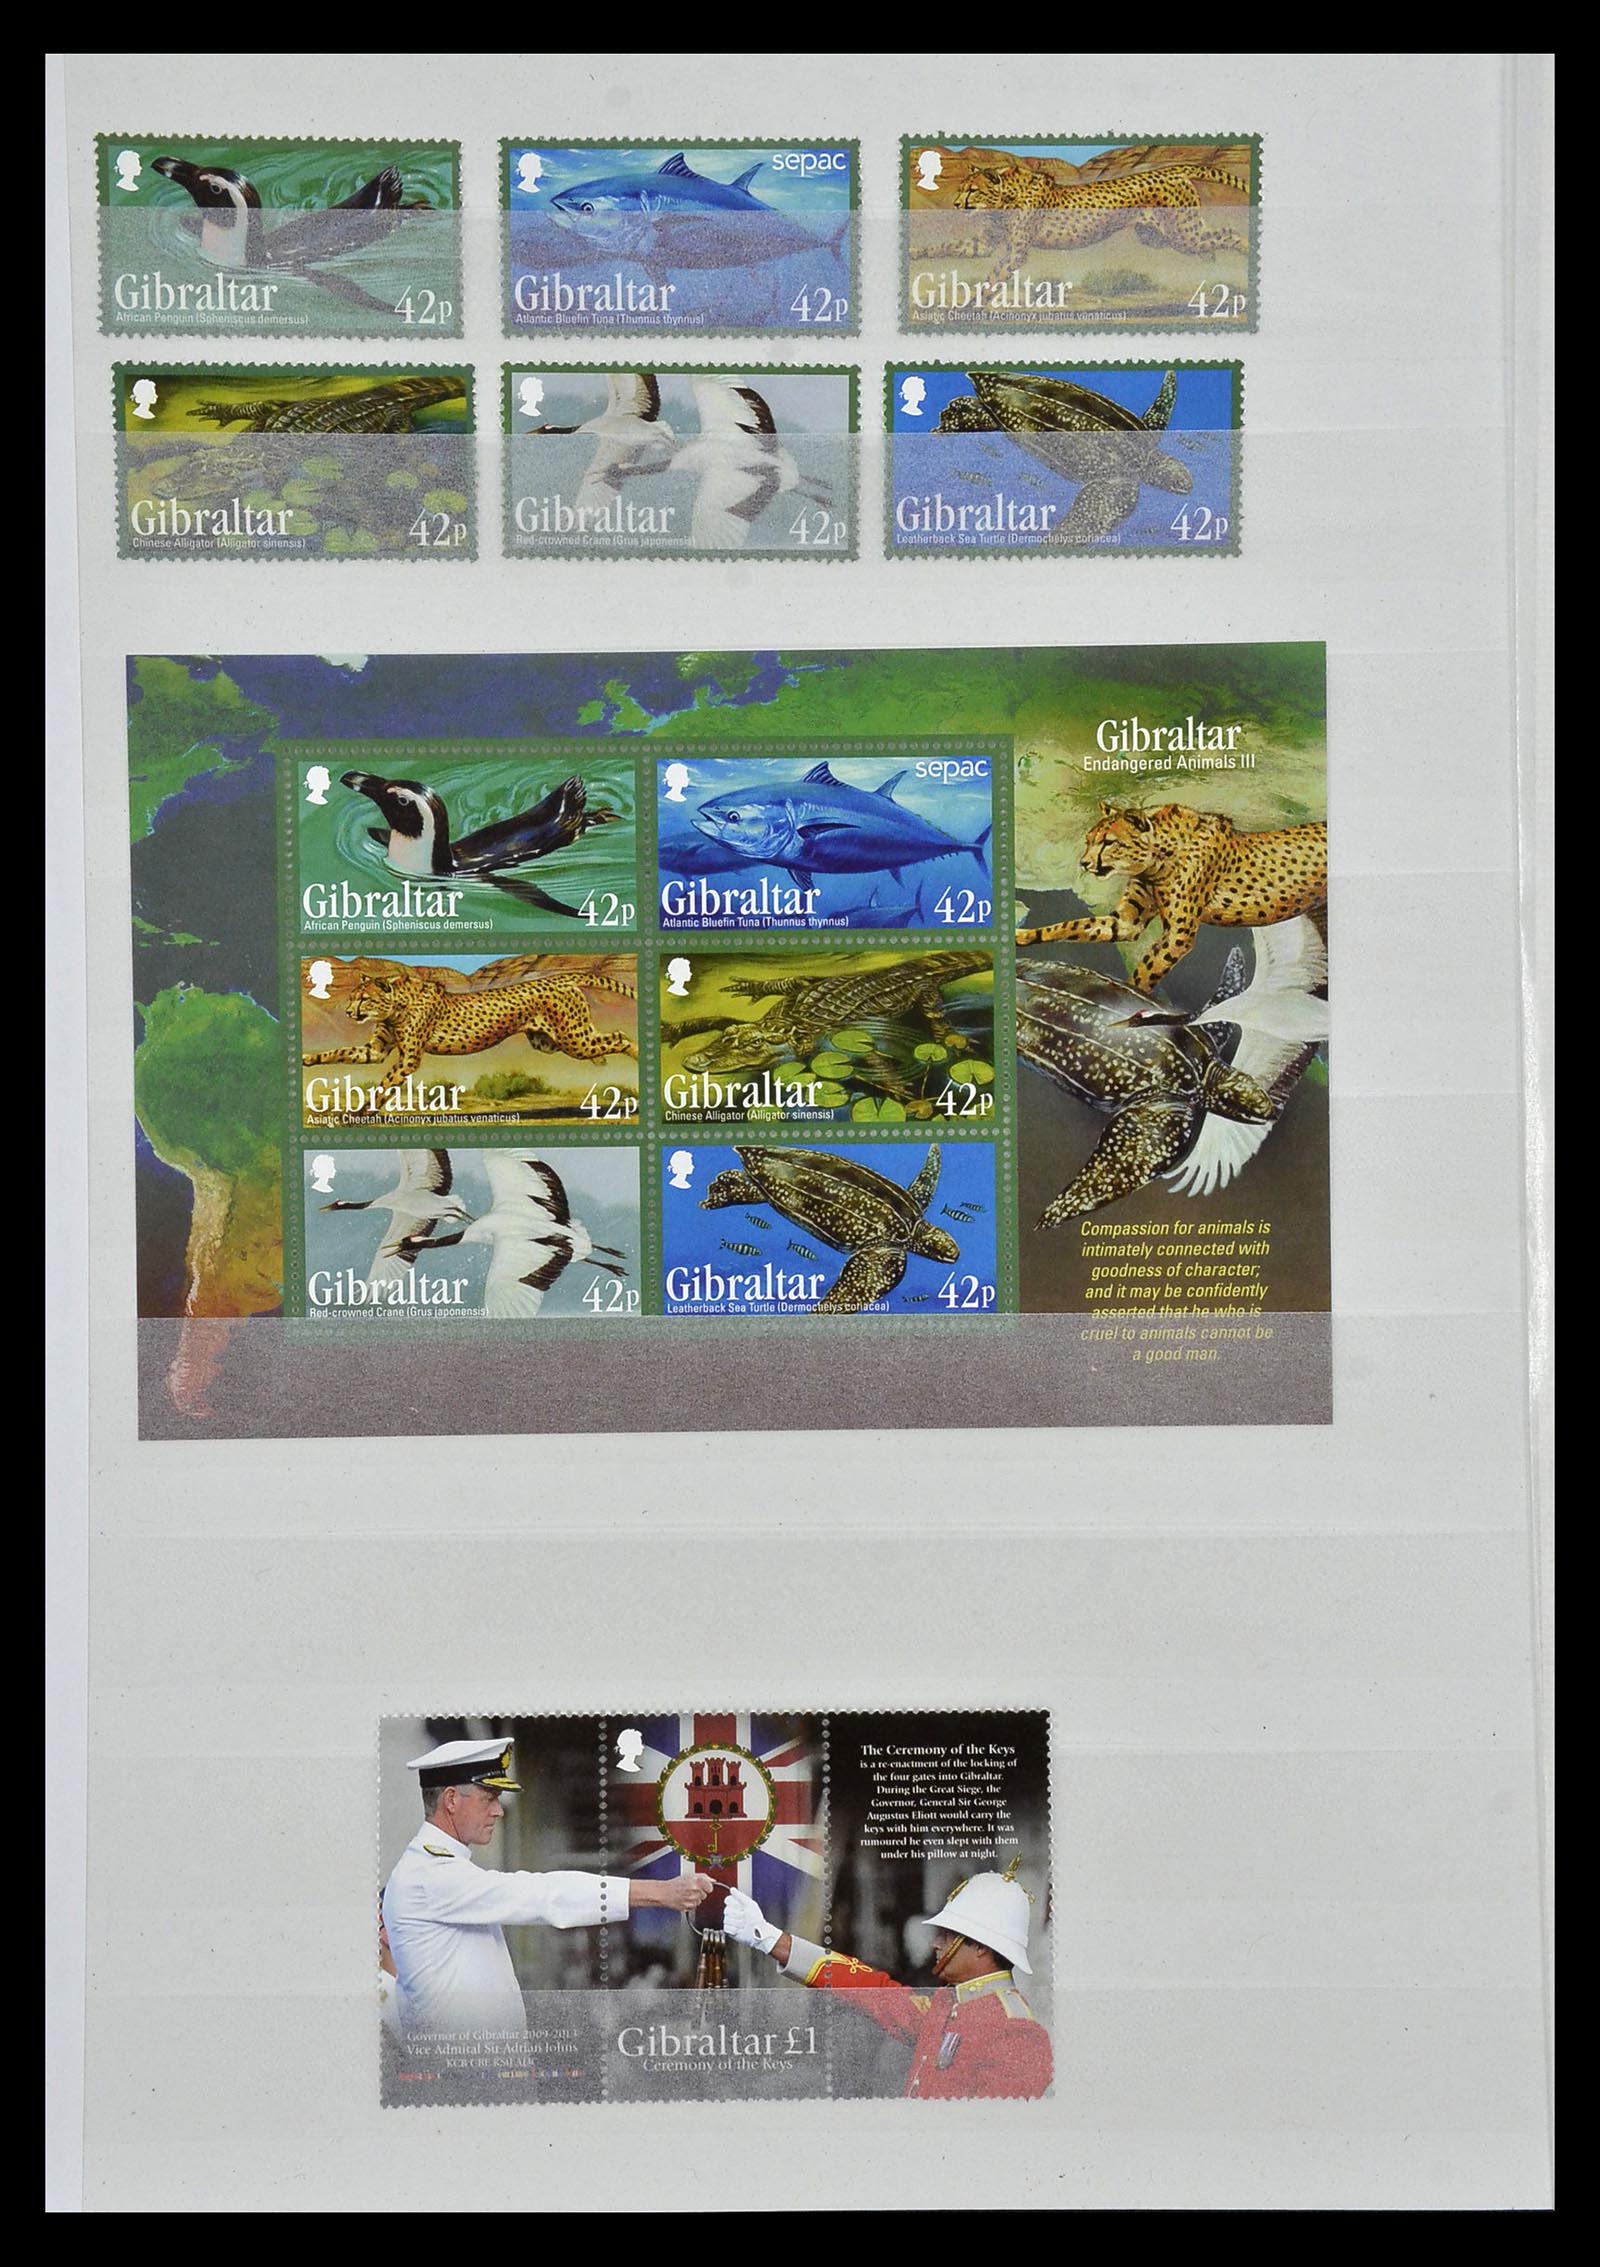 34947 141 - Stamp Collection 34947 Gibraltar 1912-2013.